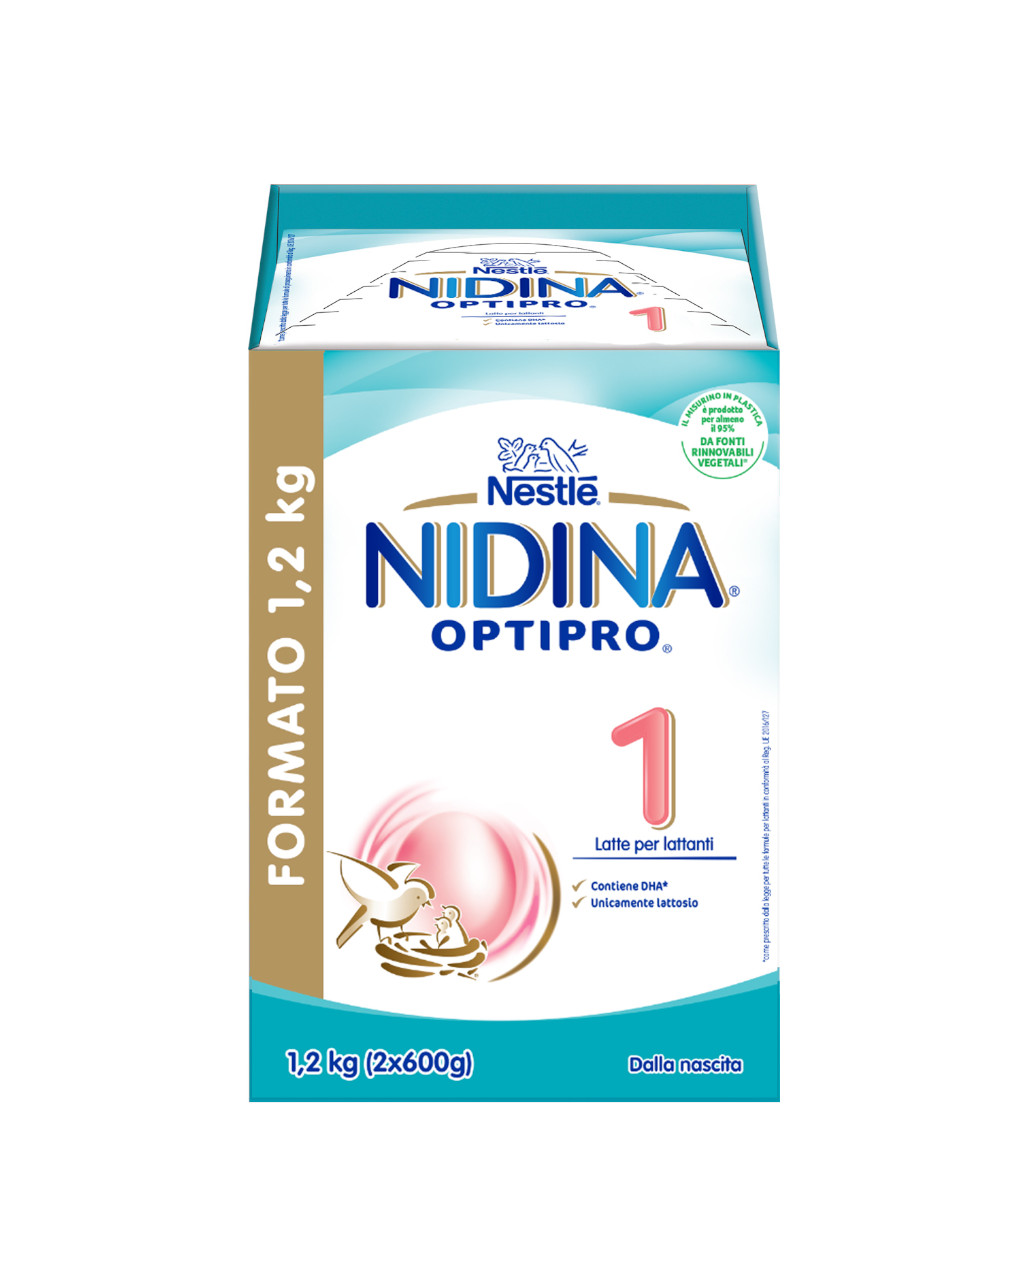 Nestlé nidina optipro 1 dalla nascita latte in polvere - 1.2 kg (2x600g)